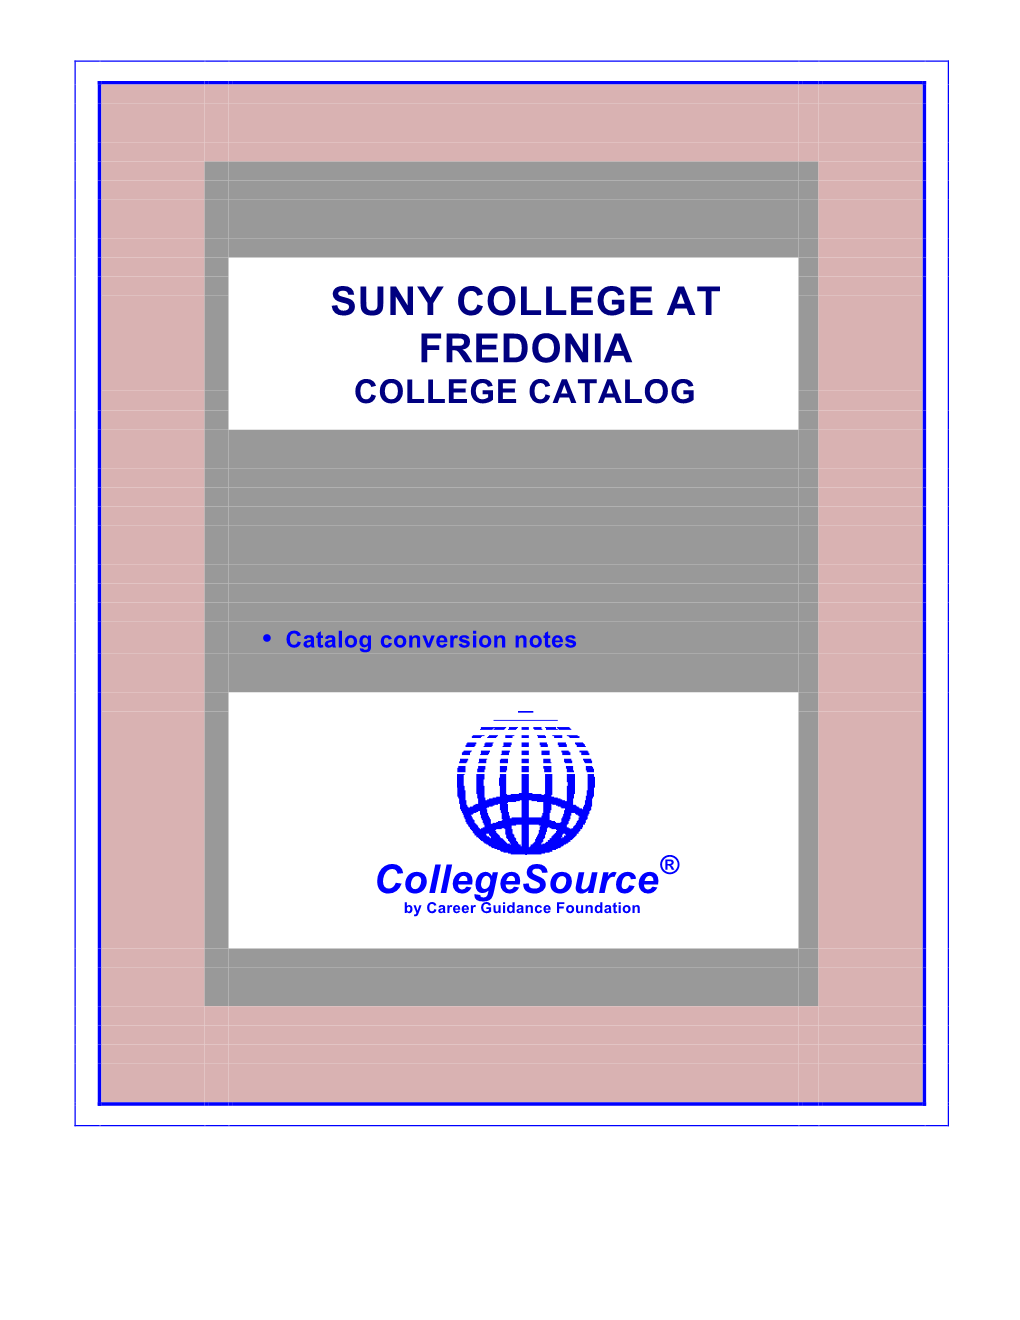 Suny College at Fredonia College Catalog